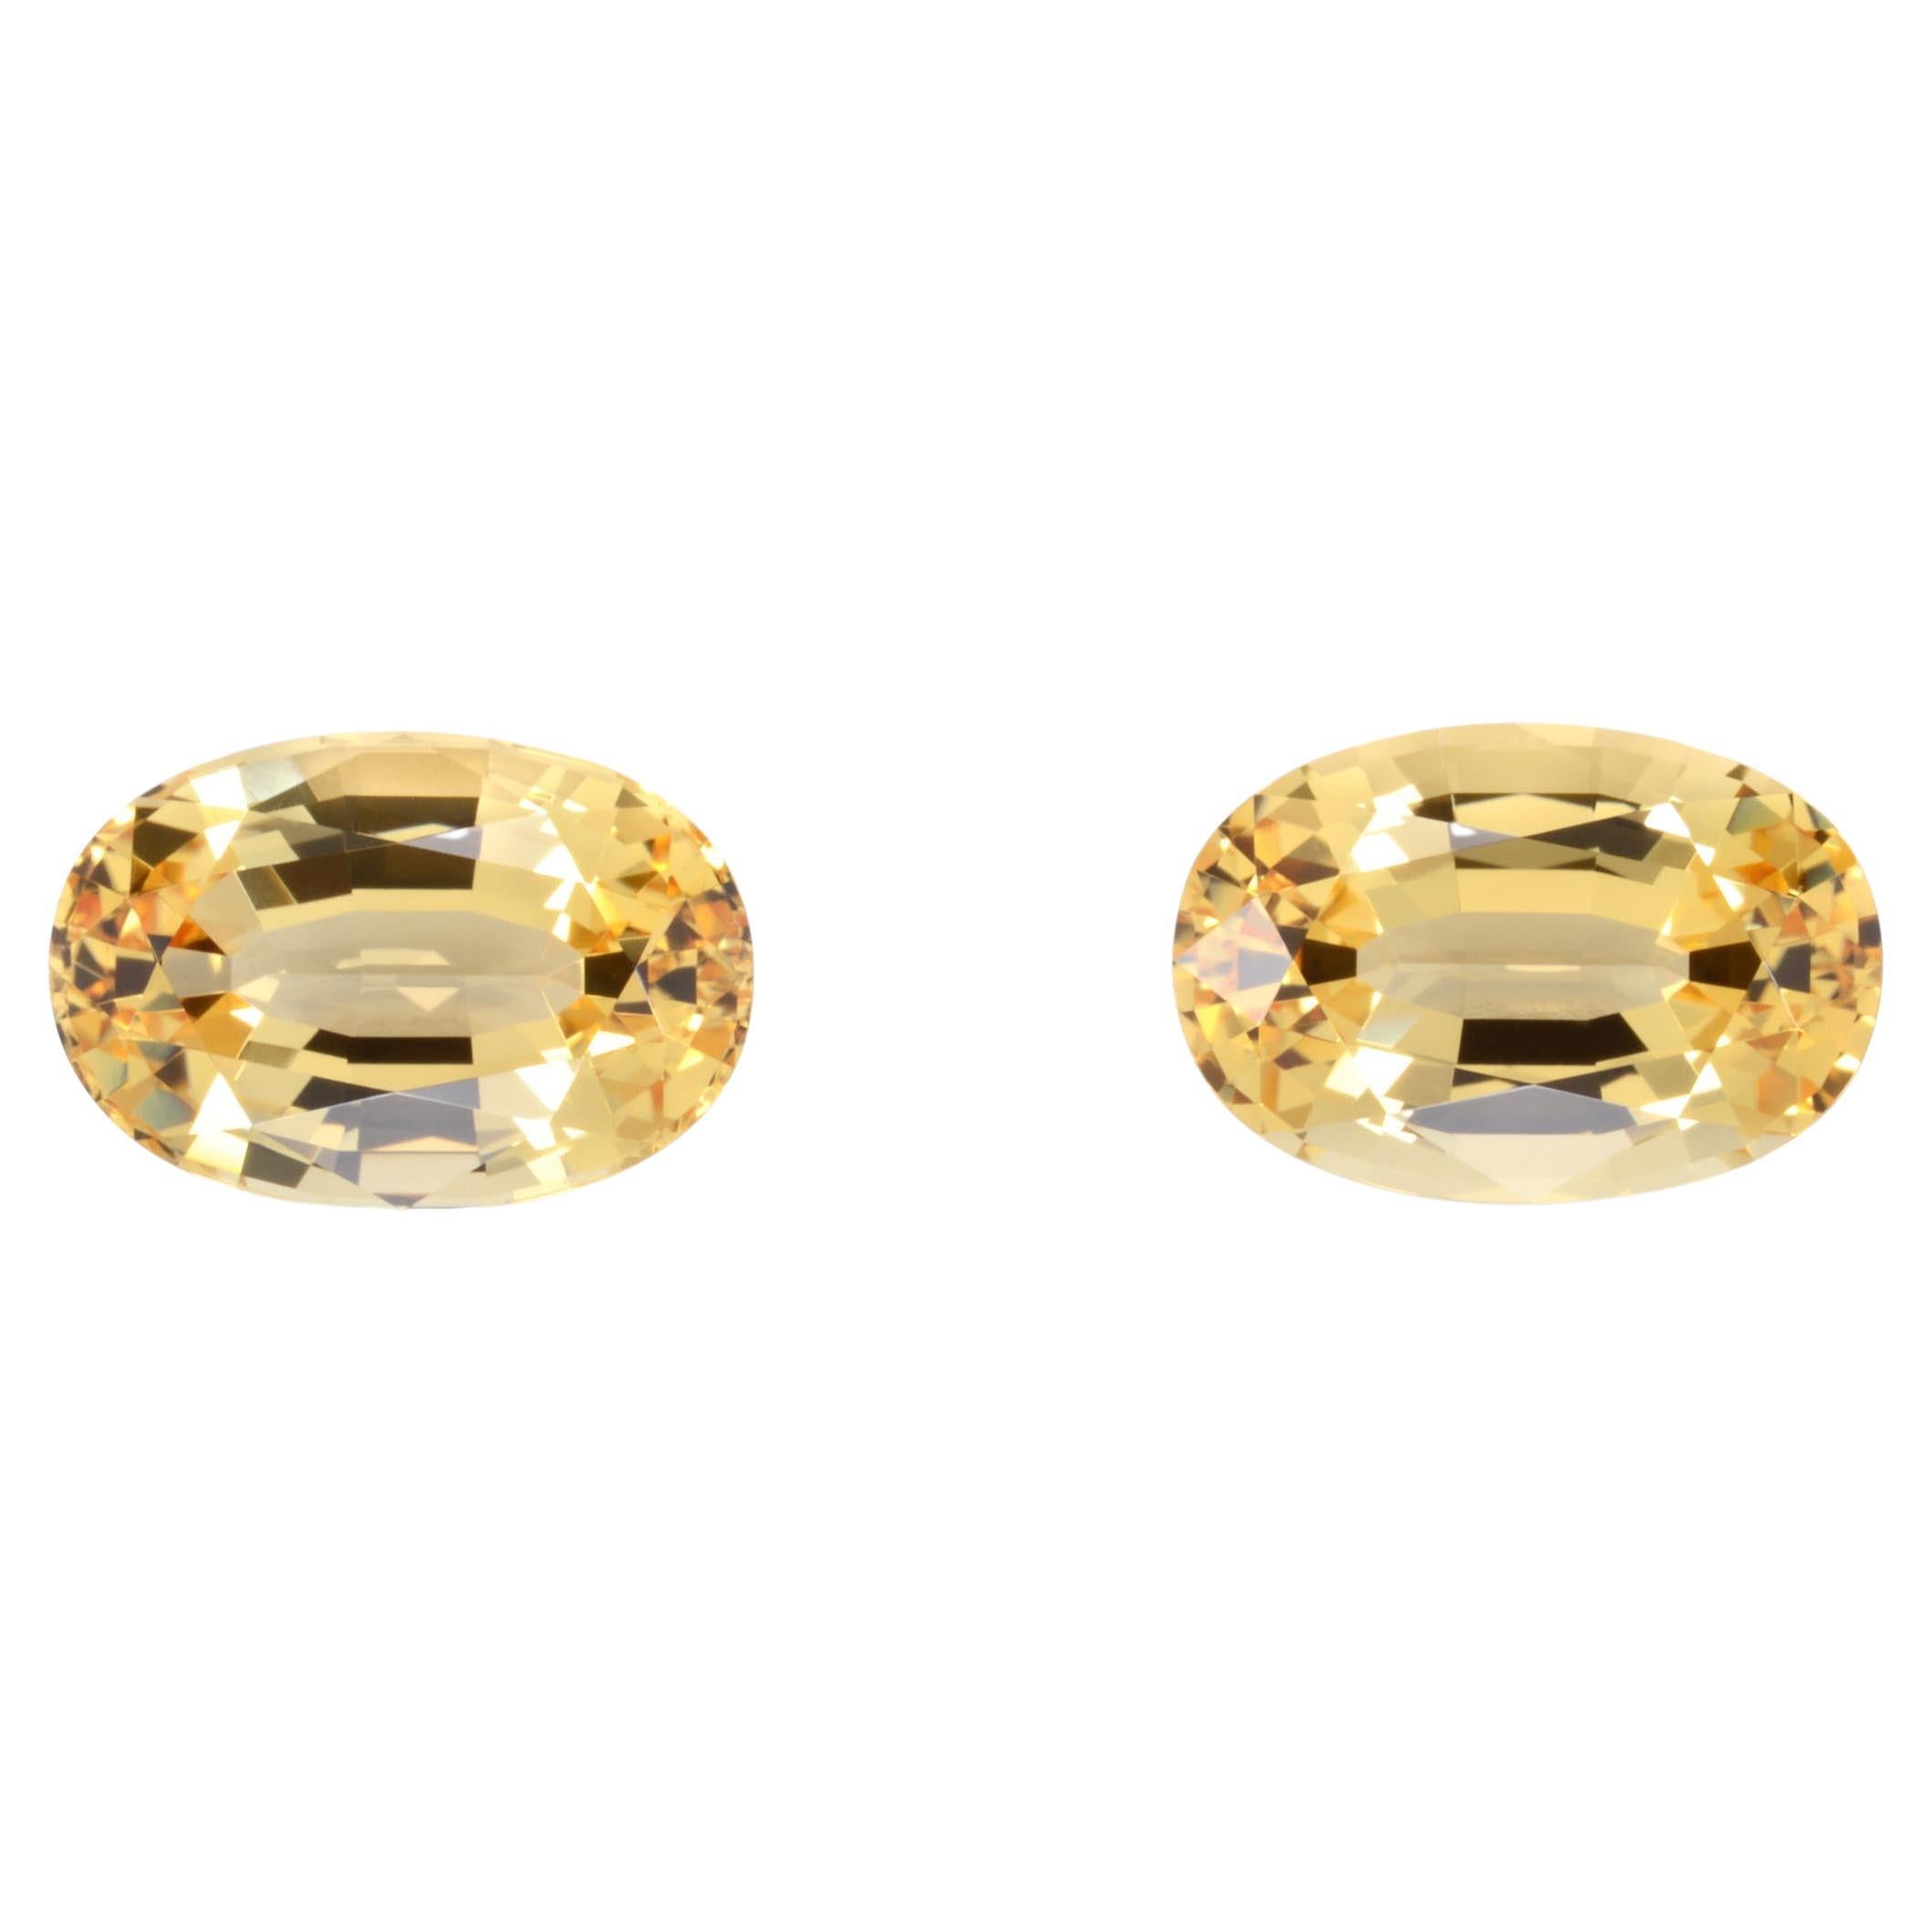 Imperial Topaz Earring Gemstones 10.80 Carat Oval Loose Gems For Sale